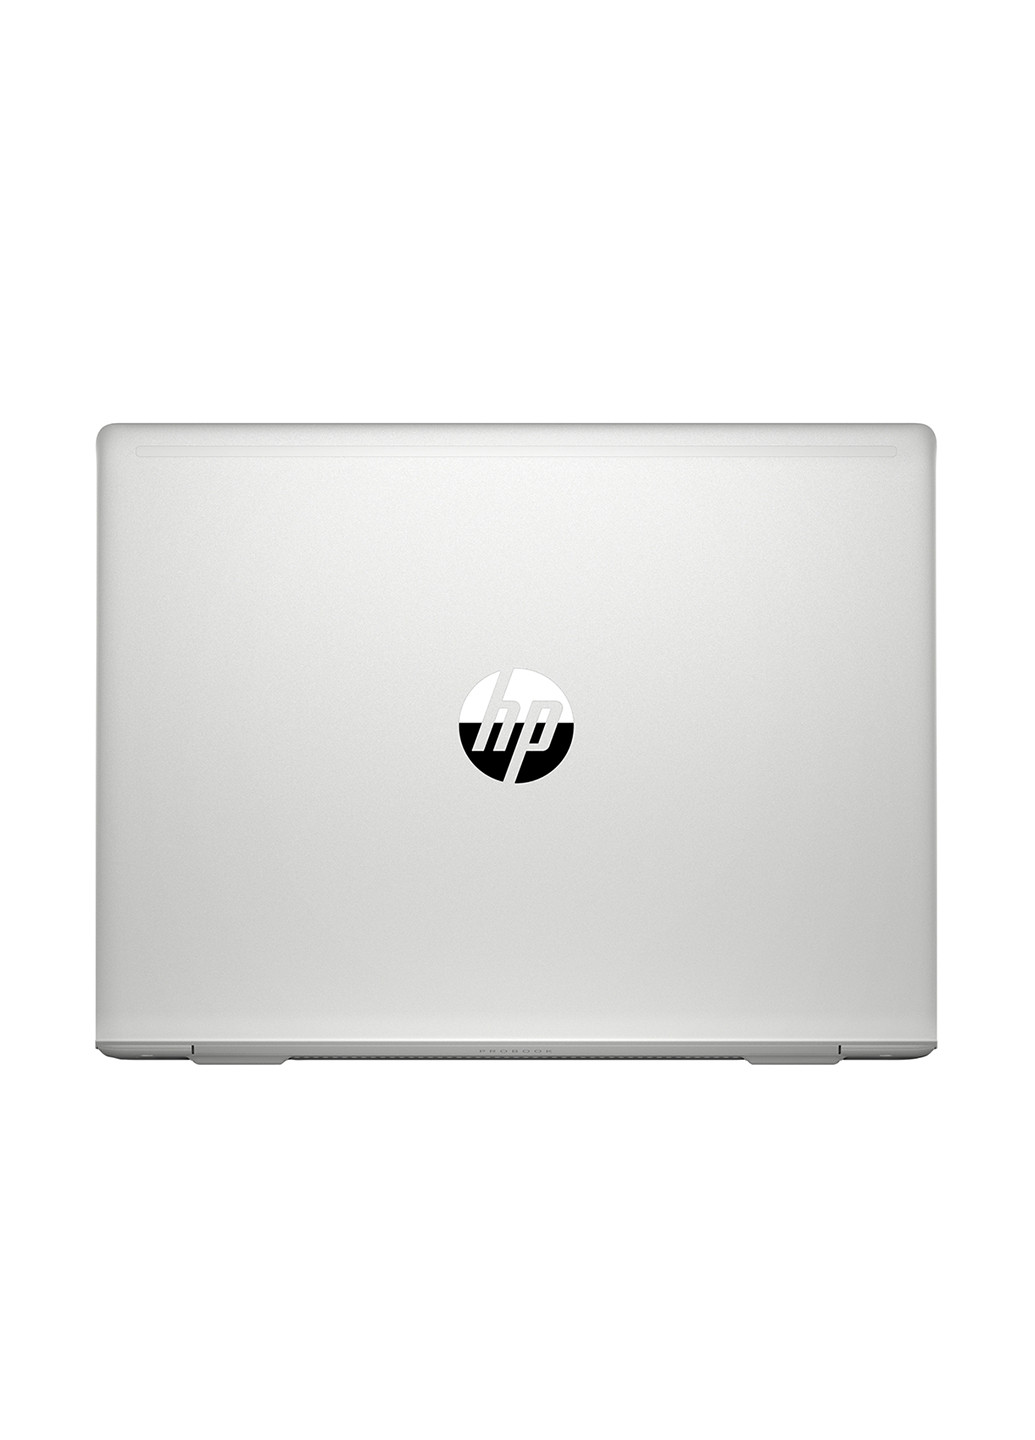 Ноутбук HP probook 430 g6 (6hl47ea) silver (136402382)